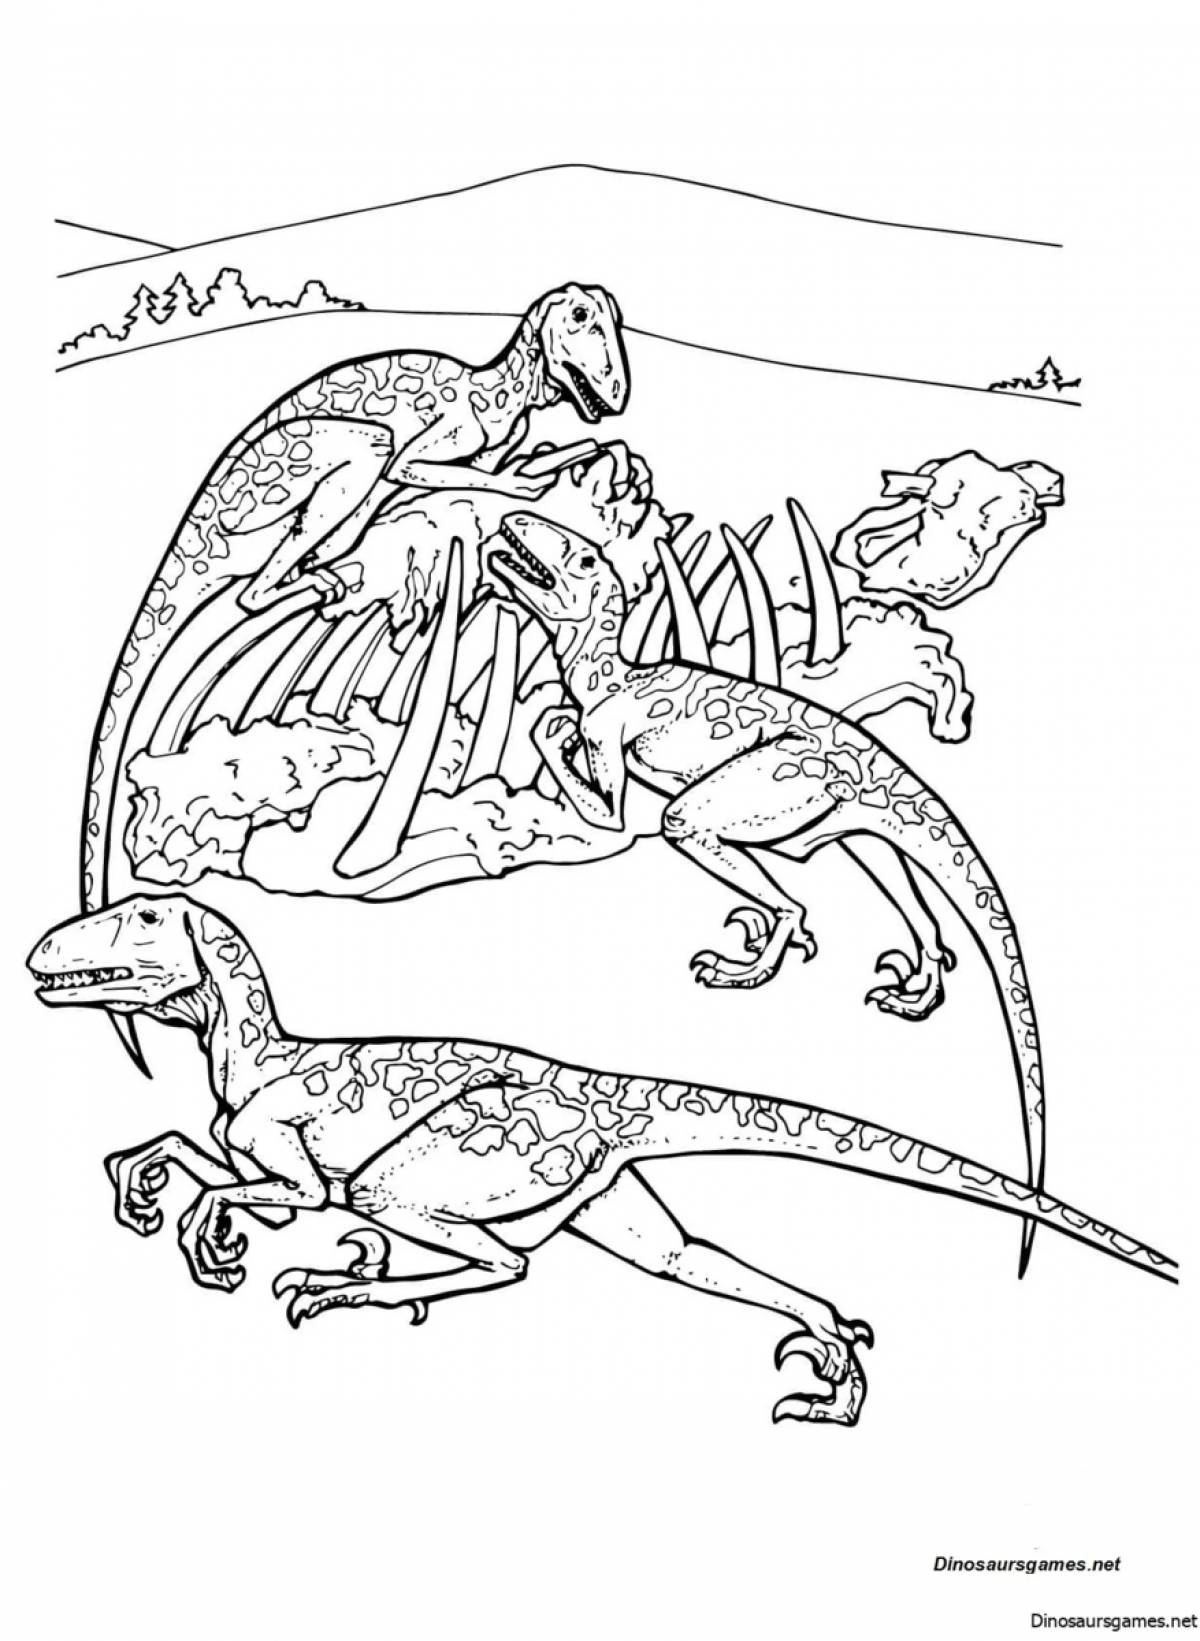 Tempting dinosaur battle illustration